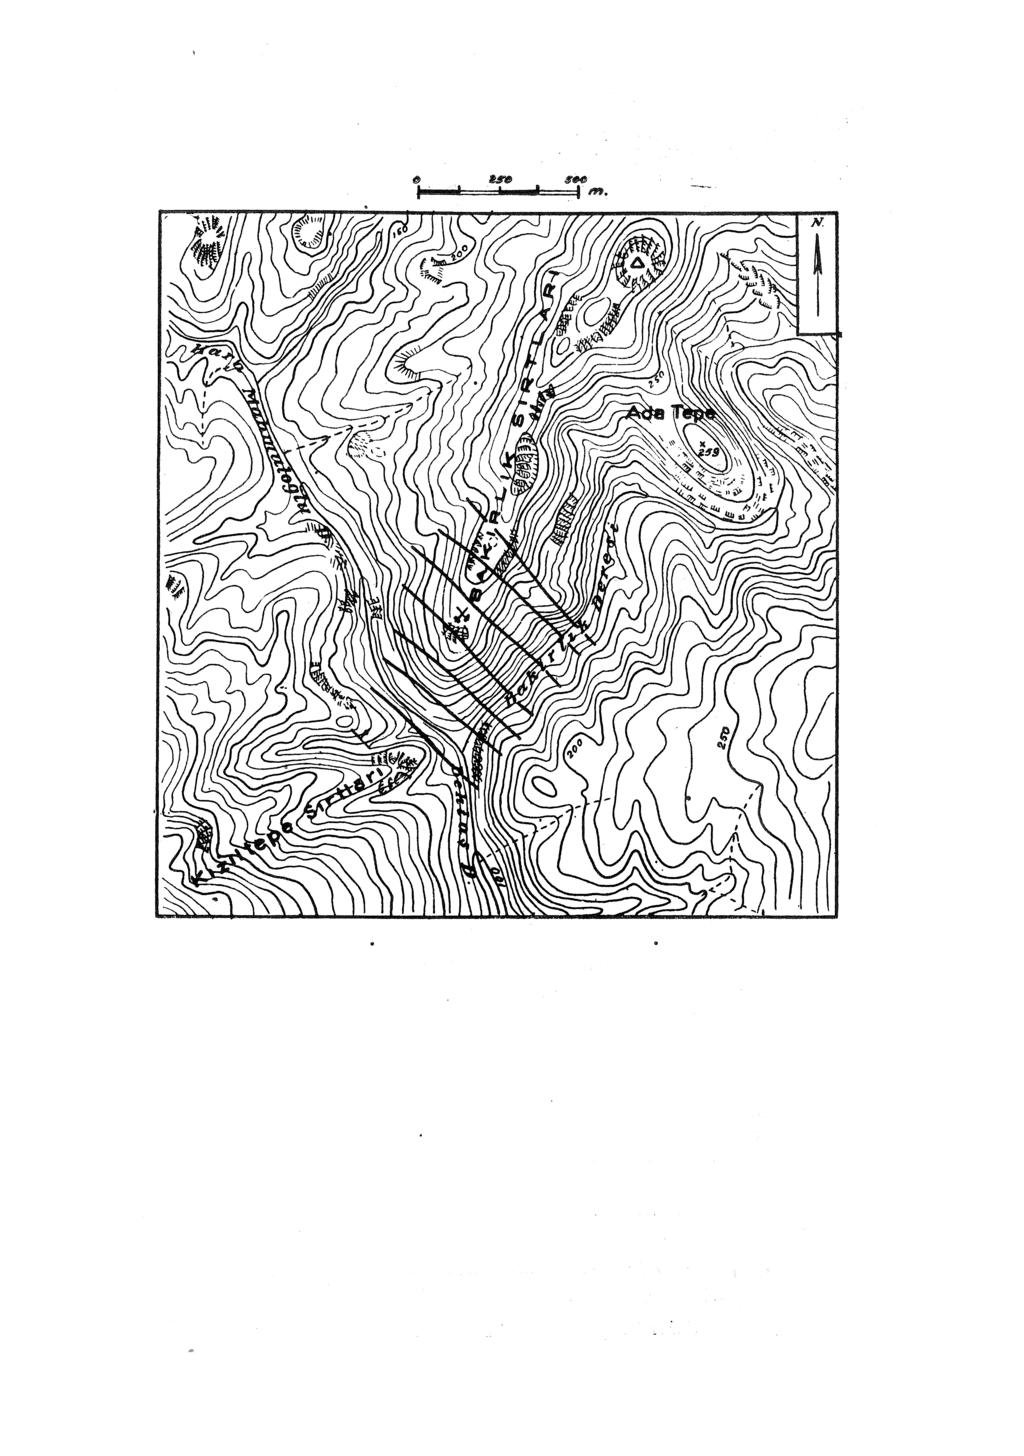 4 Şekil 2» Karahayıt (Âyassmant - Altınova) magnetıt yatağının ekay istikametini gösterir harta Fig» 2 «Carte de la direction cpécaillement du minerai de magnetite de la région de Karahayit (Ayazmant